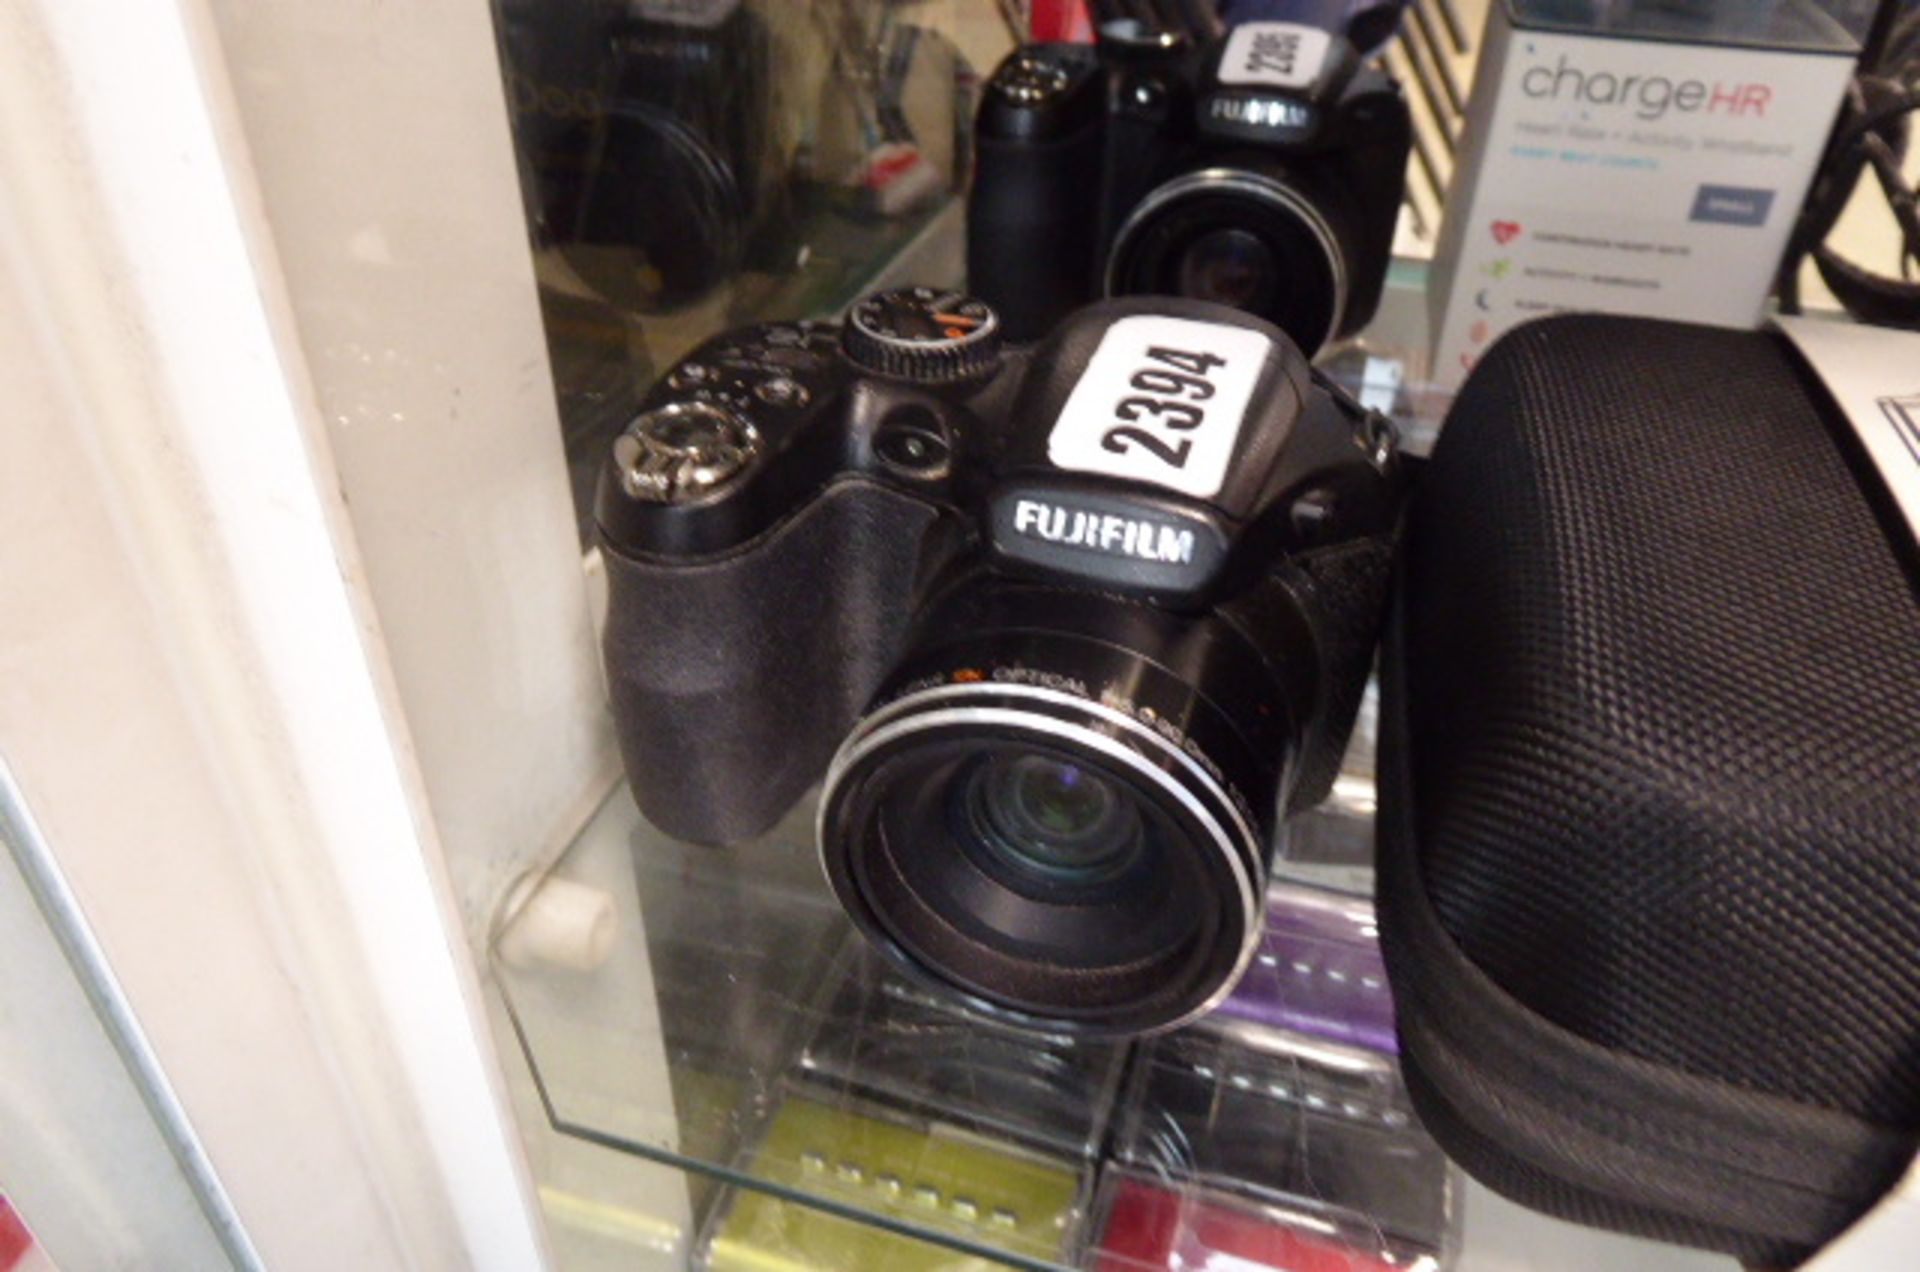 2317 Fuji Film bridge camera no accessories